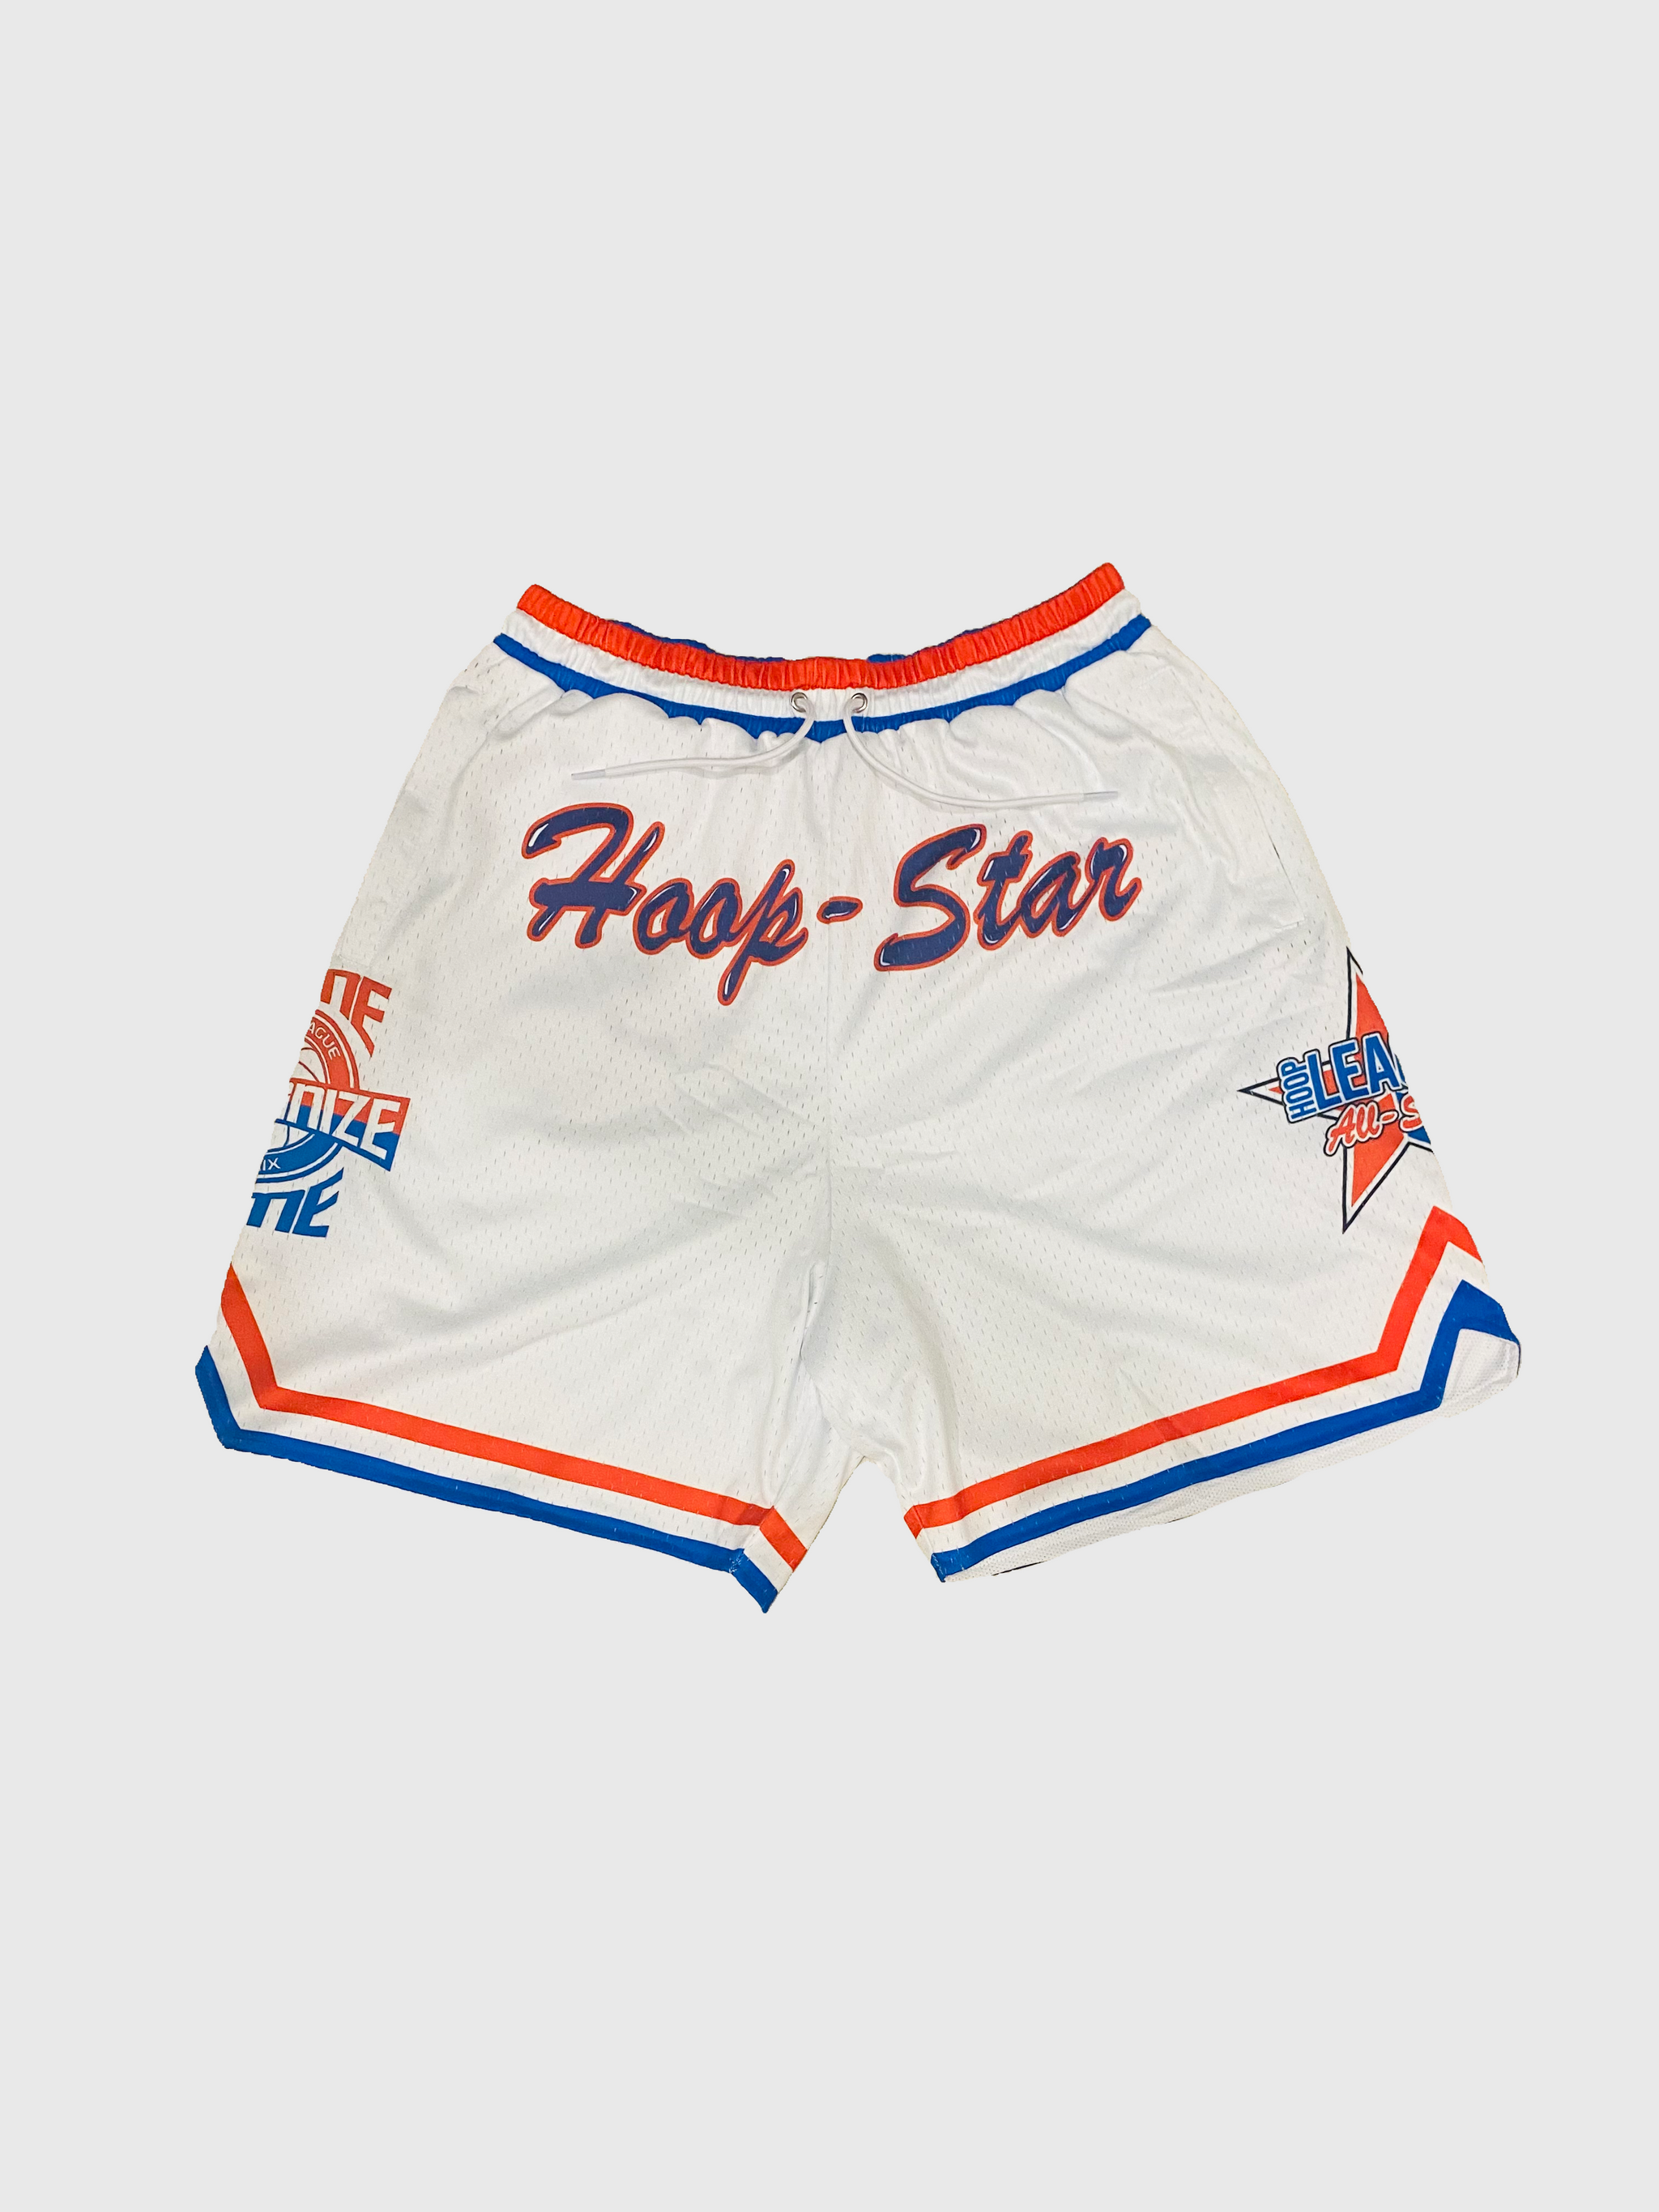 nba all star shorts